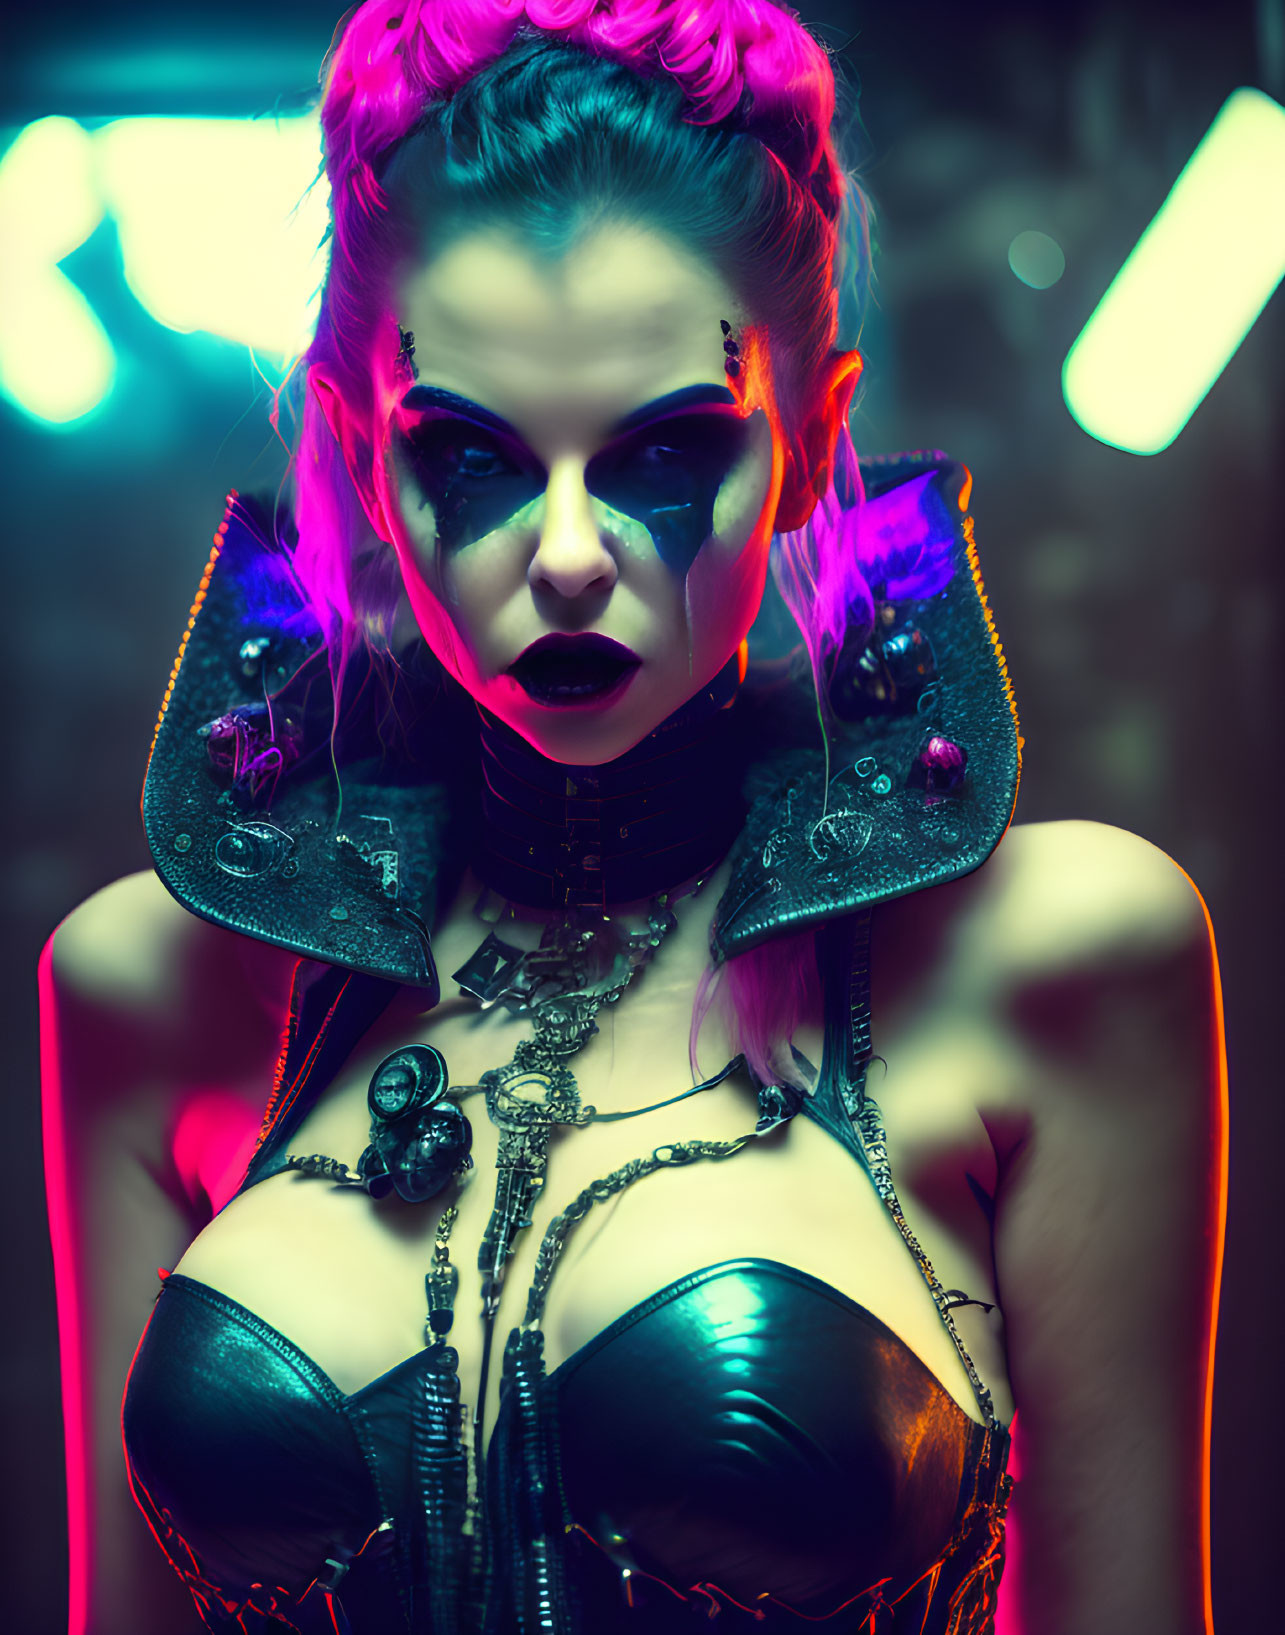 Purple-haired woman in futuristic gothic attire under neon lights